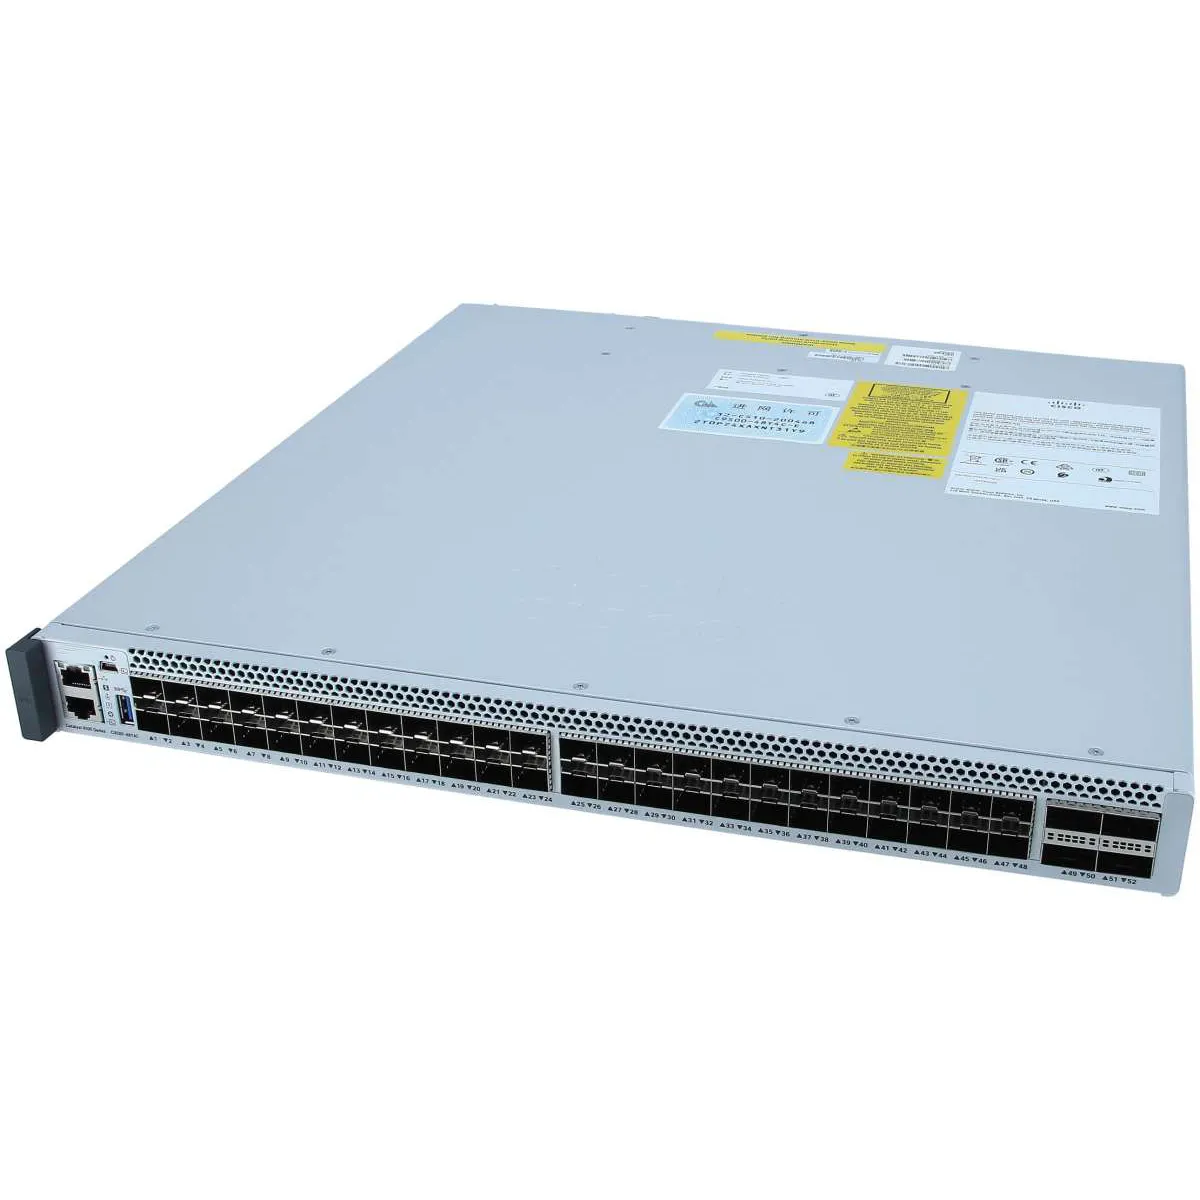 Cat alyst 9500 24-port 40G Network Essentials Switch C9500-48Y4C-A